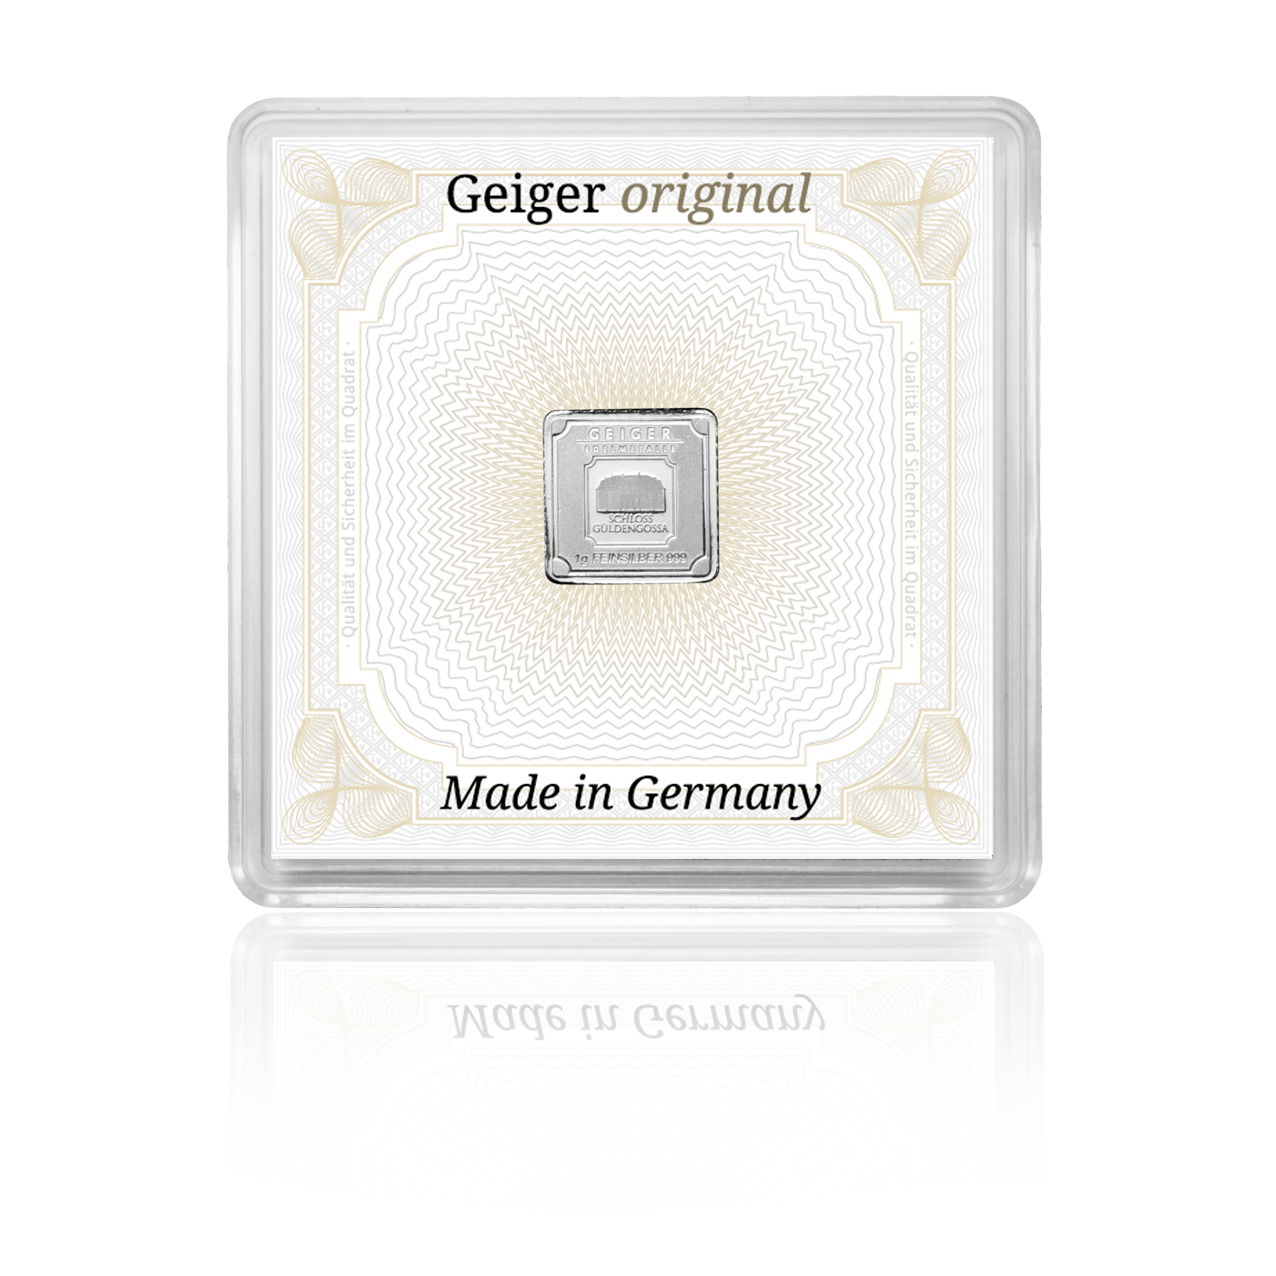 New 25 X 1 Gram Silver Bar Geiger Edelmetalle Original Multicard - Sealed 